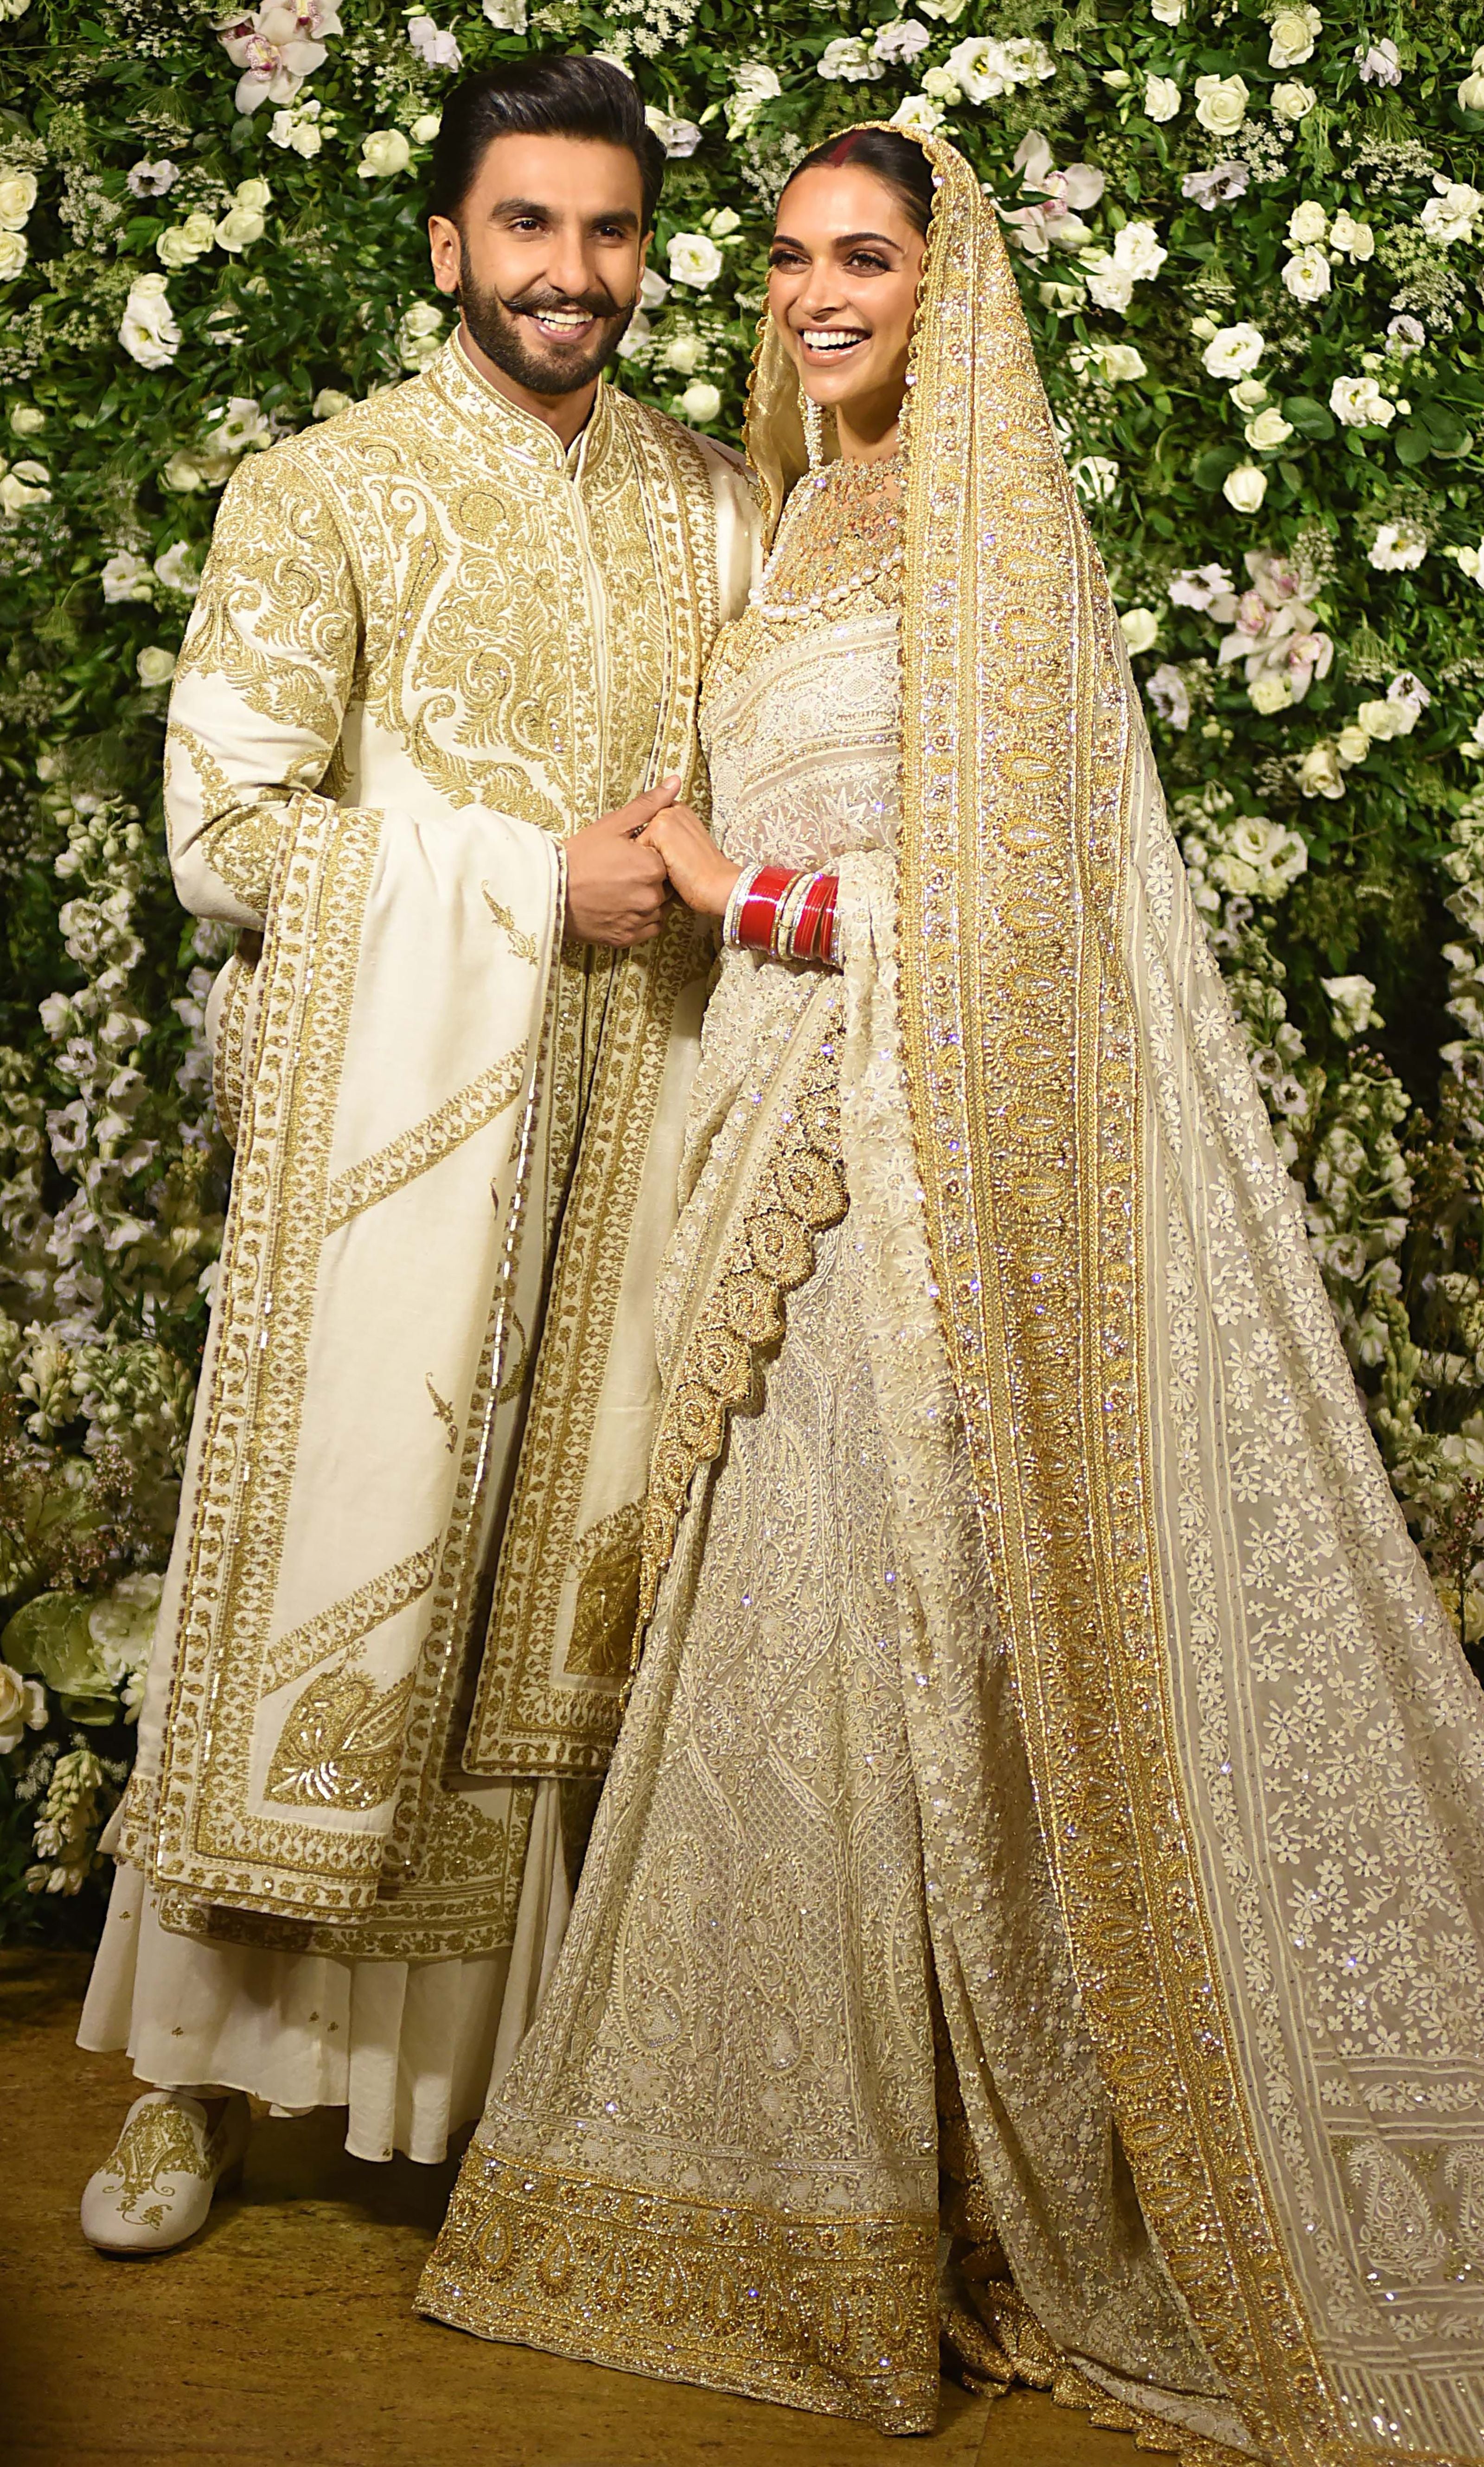 Deepika Padukone's Wedding Dress